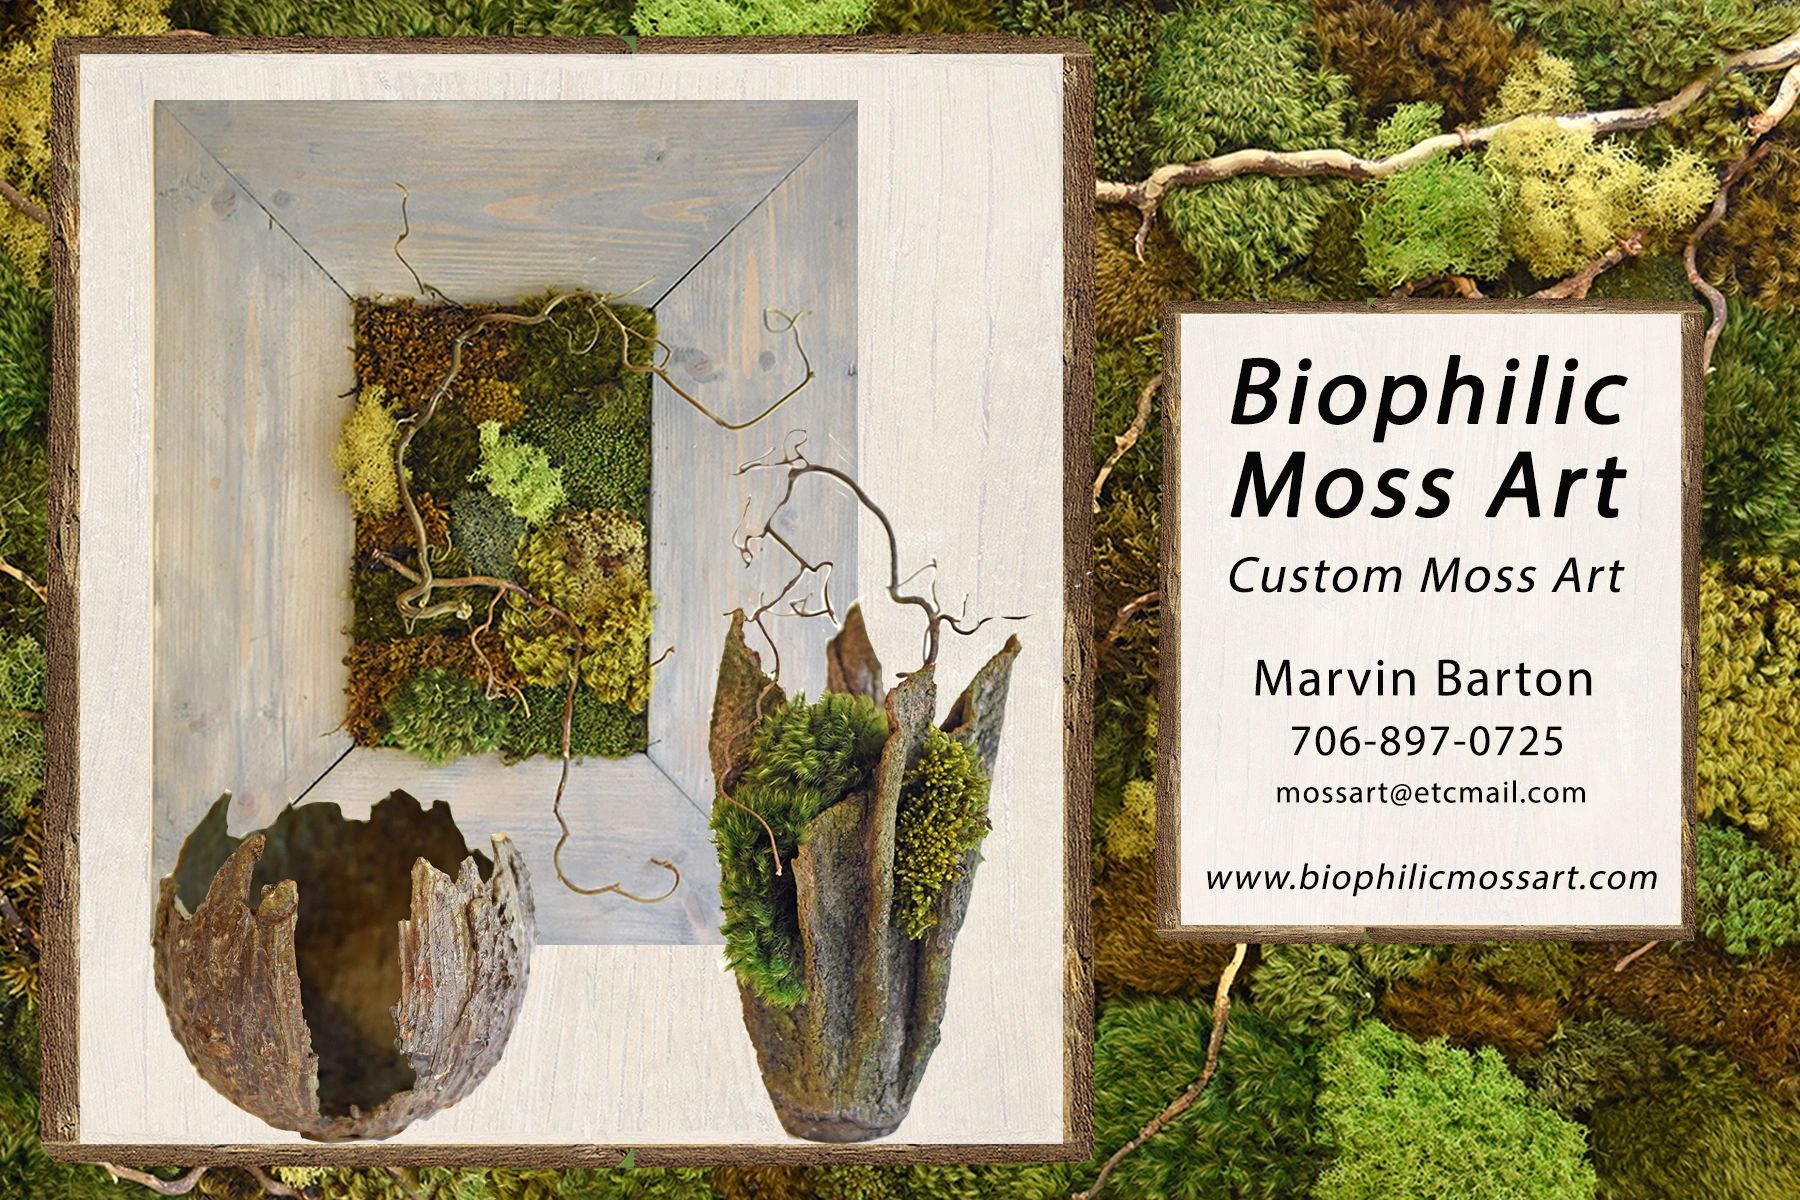 Biophilic Moss Art